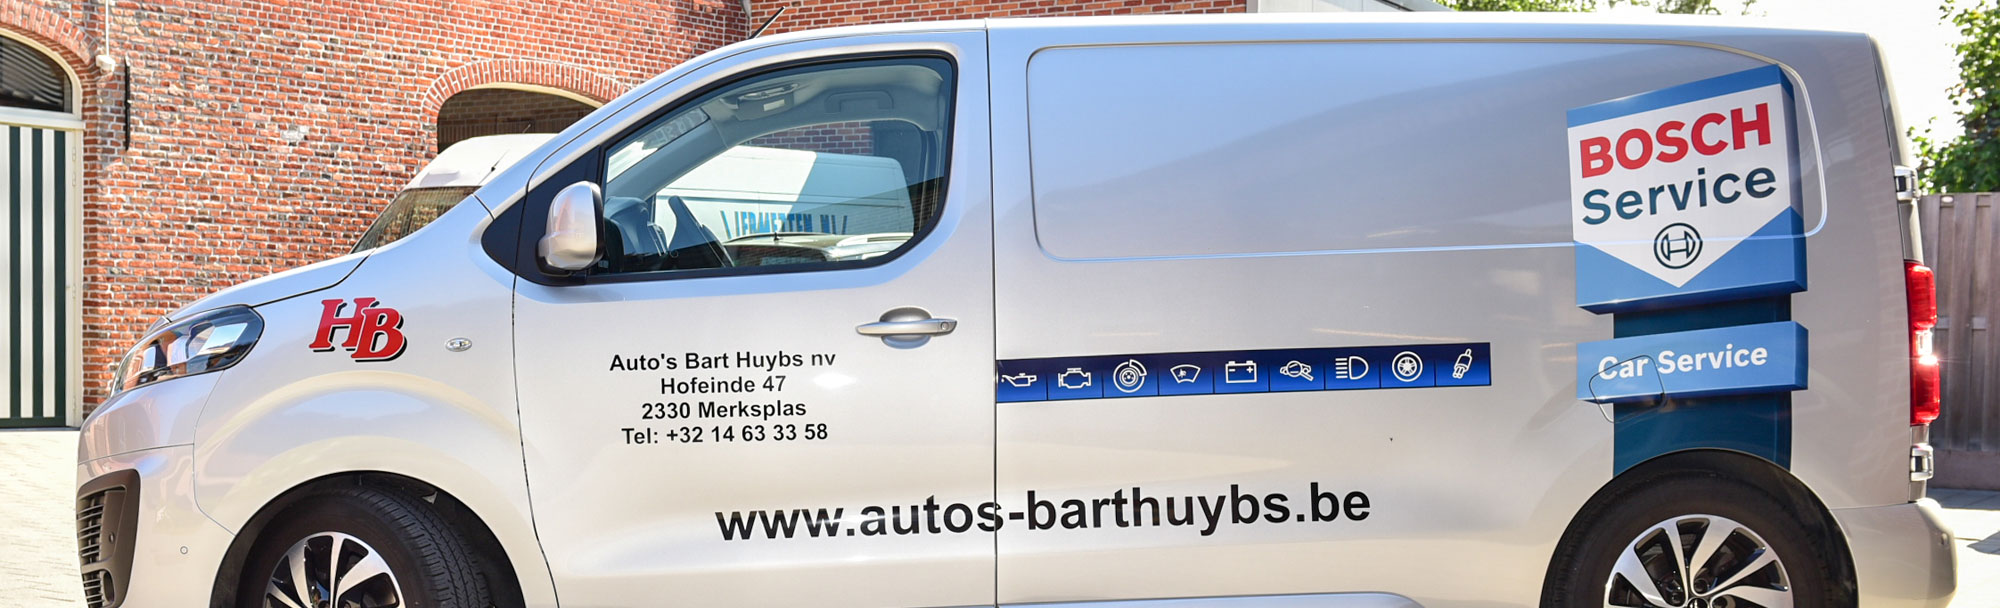 Services Bosch Car Service Auto's Bart Huybs Merksplas